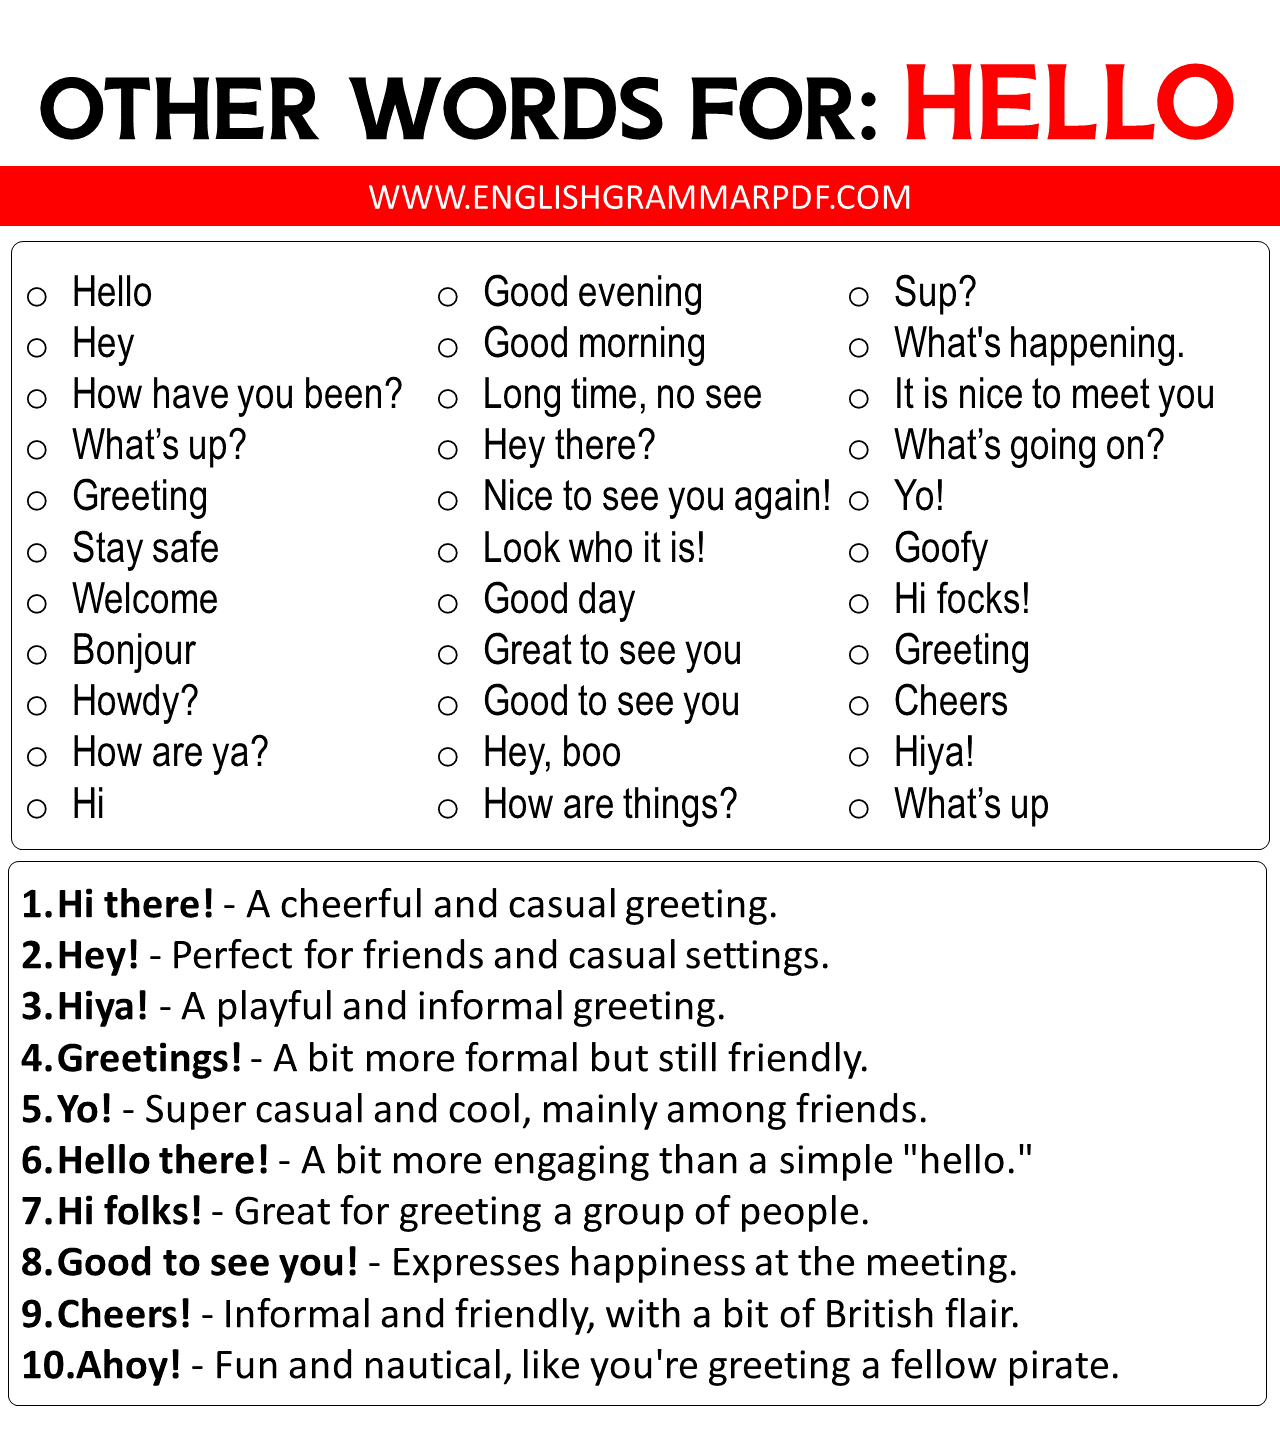 Ways to Say Hello